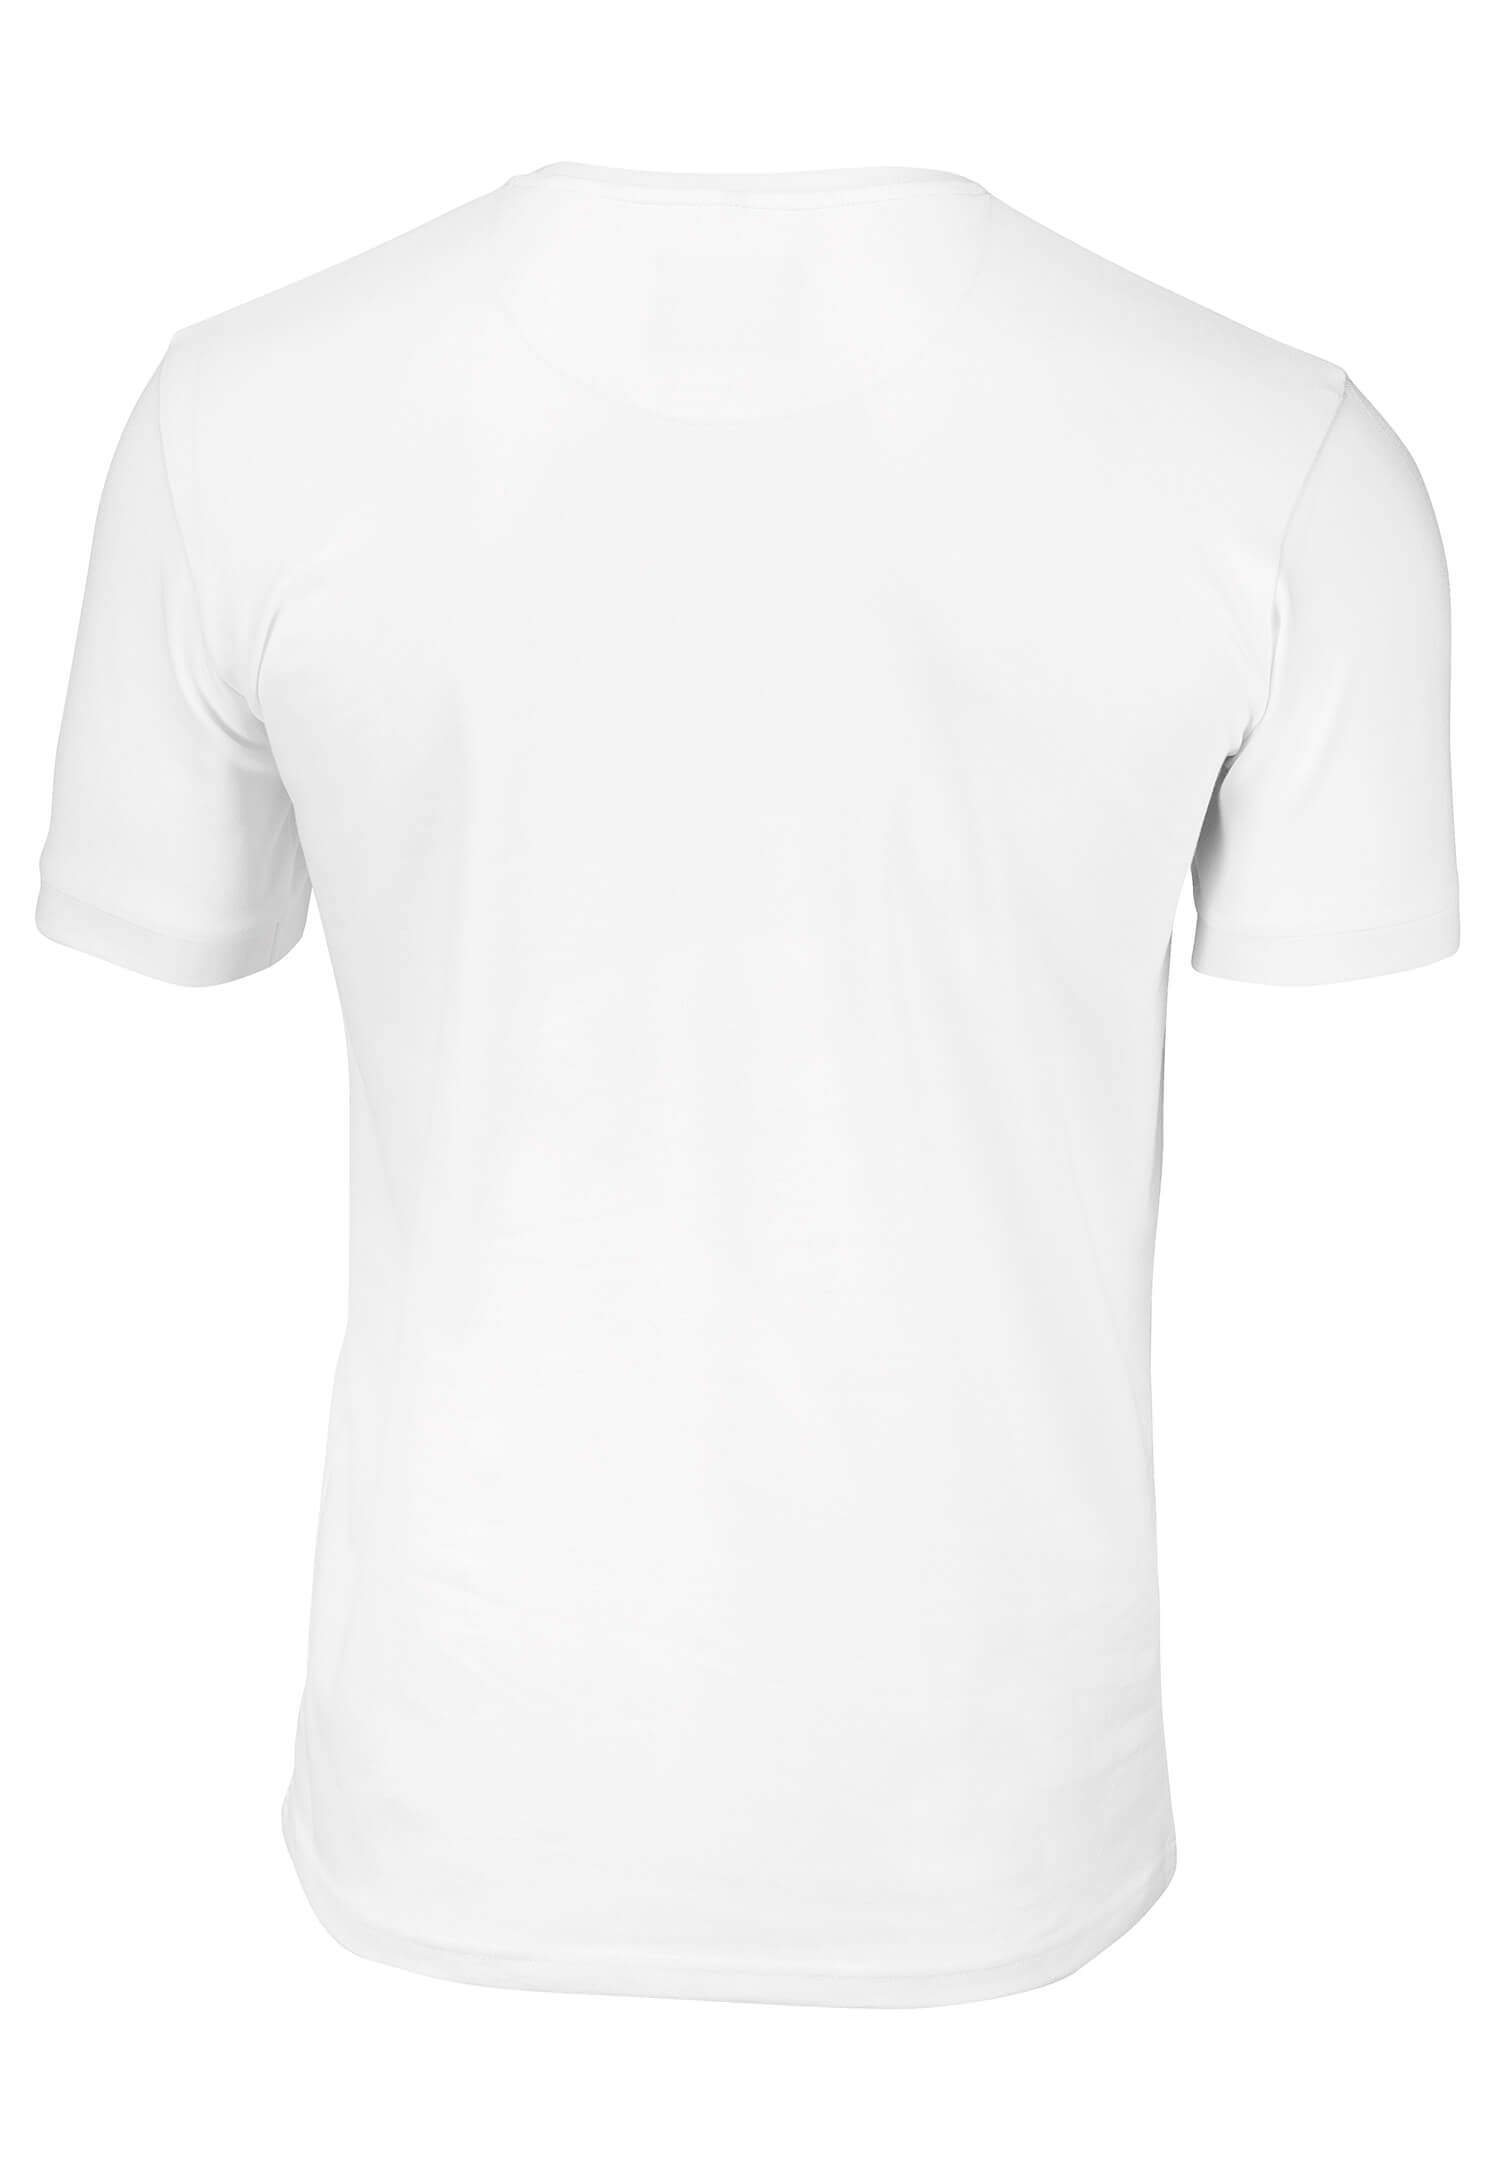 Herren Piquet Shirt - weiß - XL